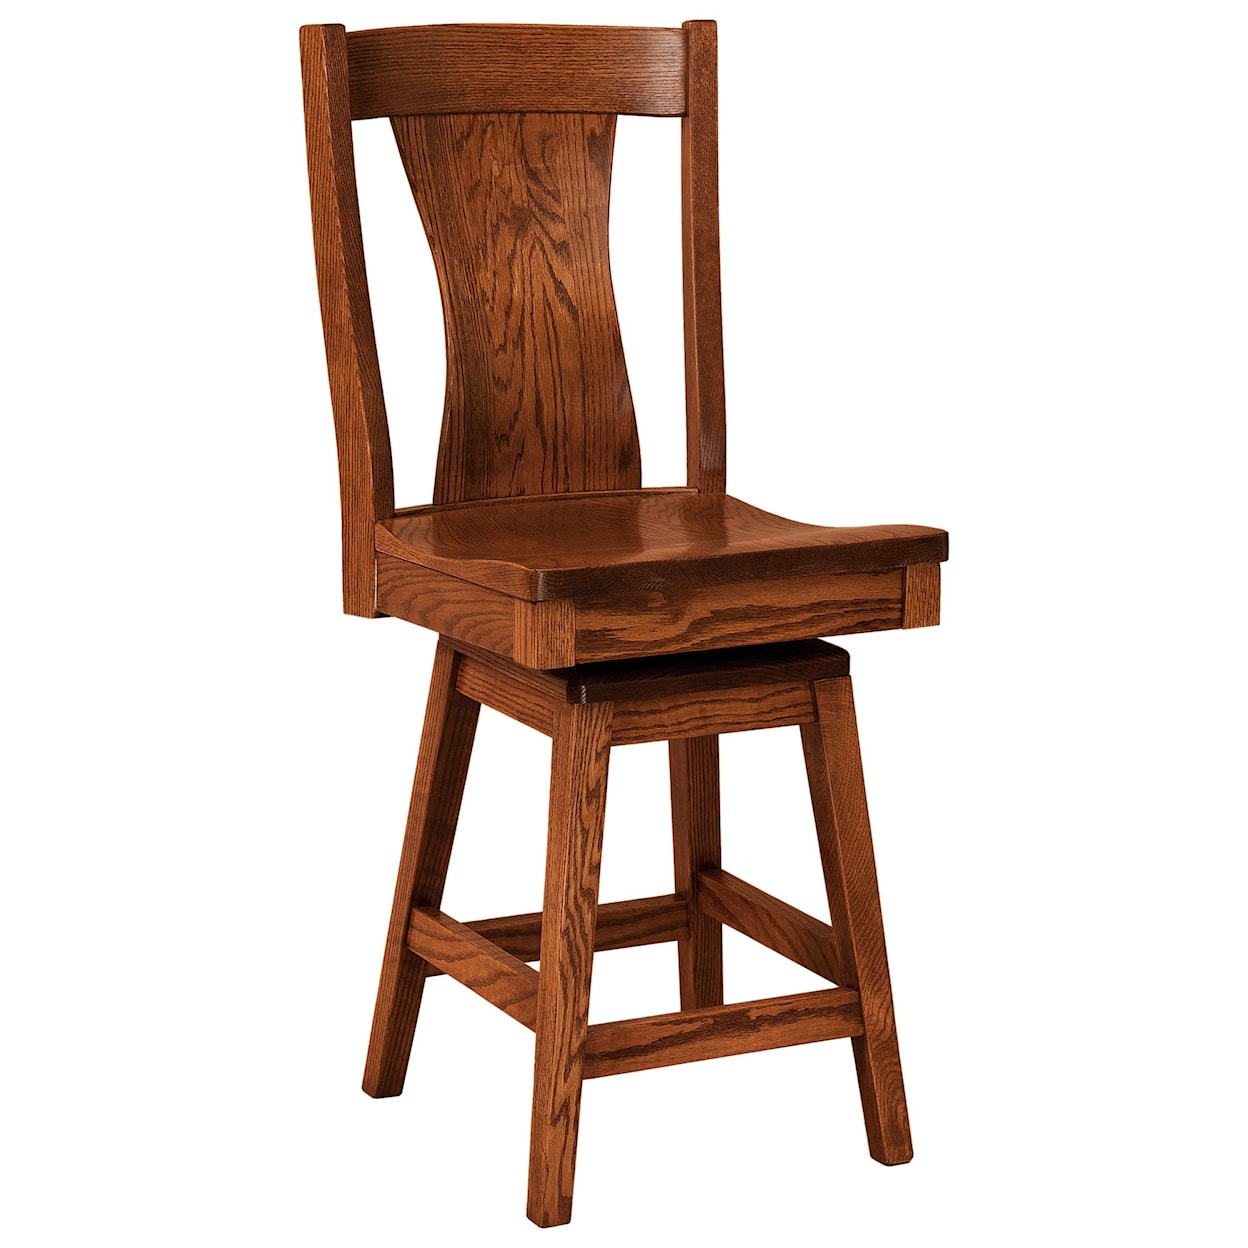 F&N Woodworking Westin Swivel Bar Height Stool - Wood Seat